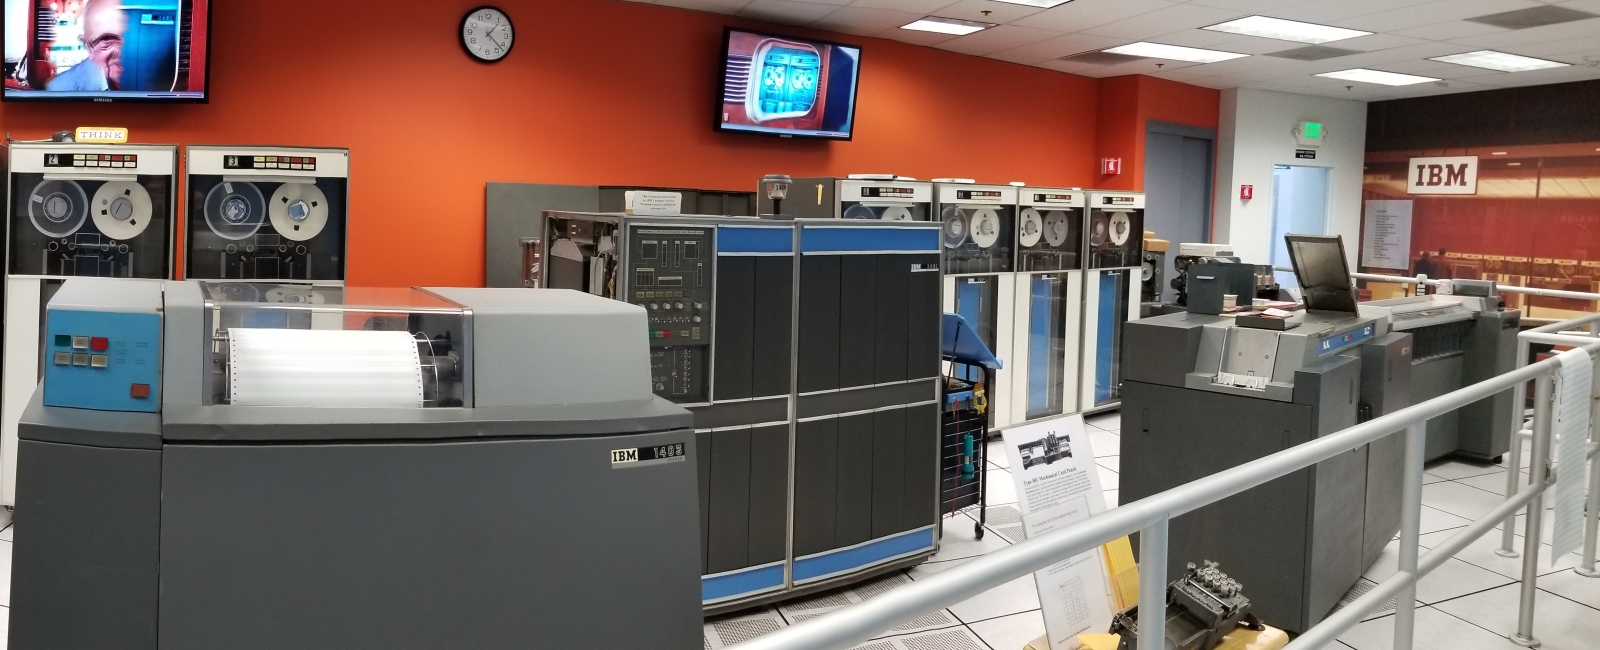 IBM 1403 Mainframe